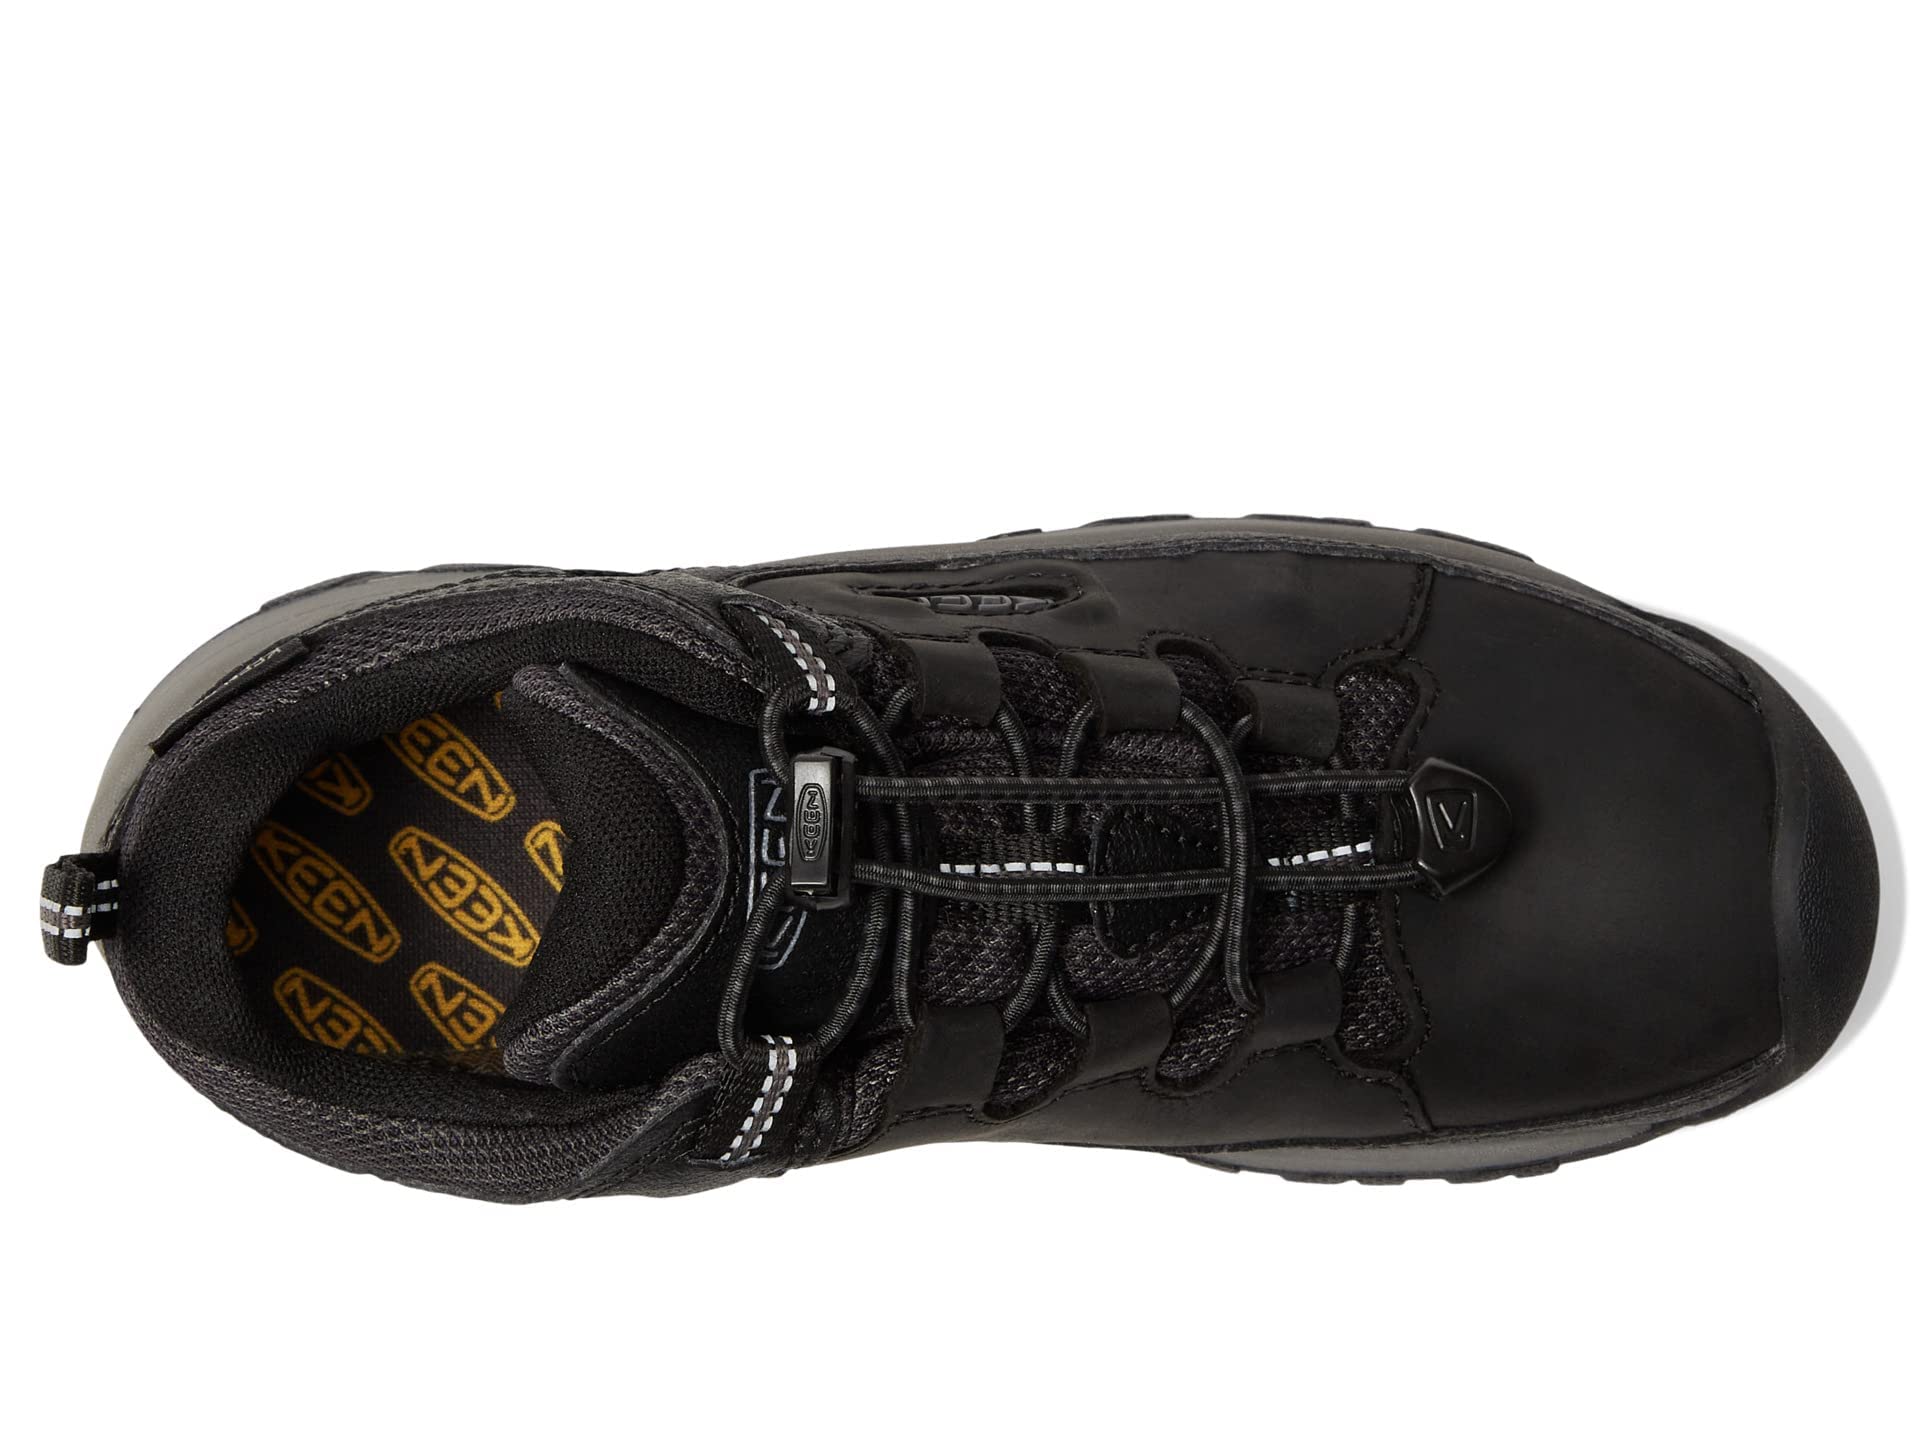 KEEN Unisex-Child Targhee Low Height Waterproof Hiking Shoes